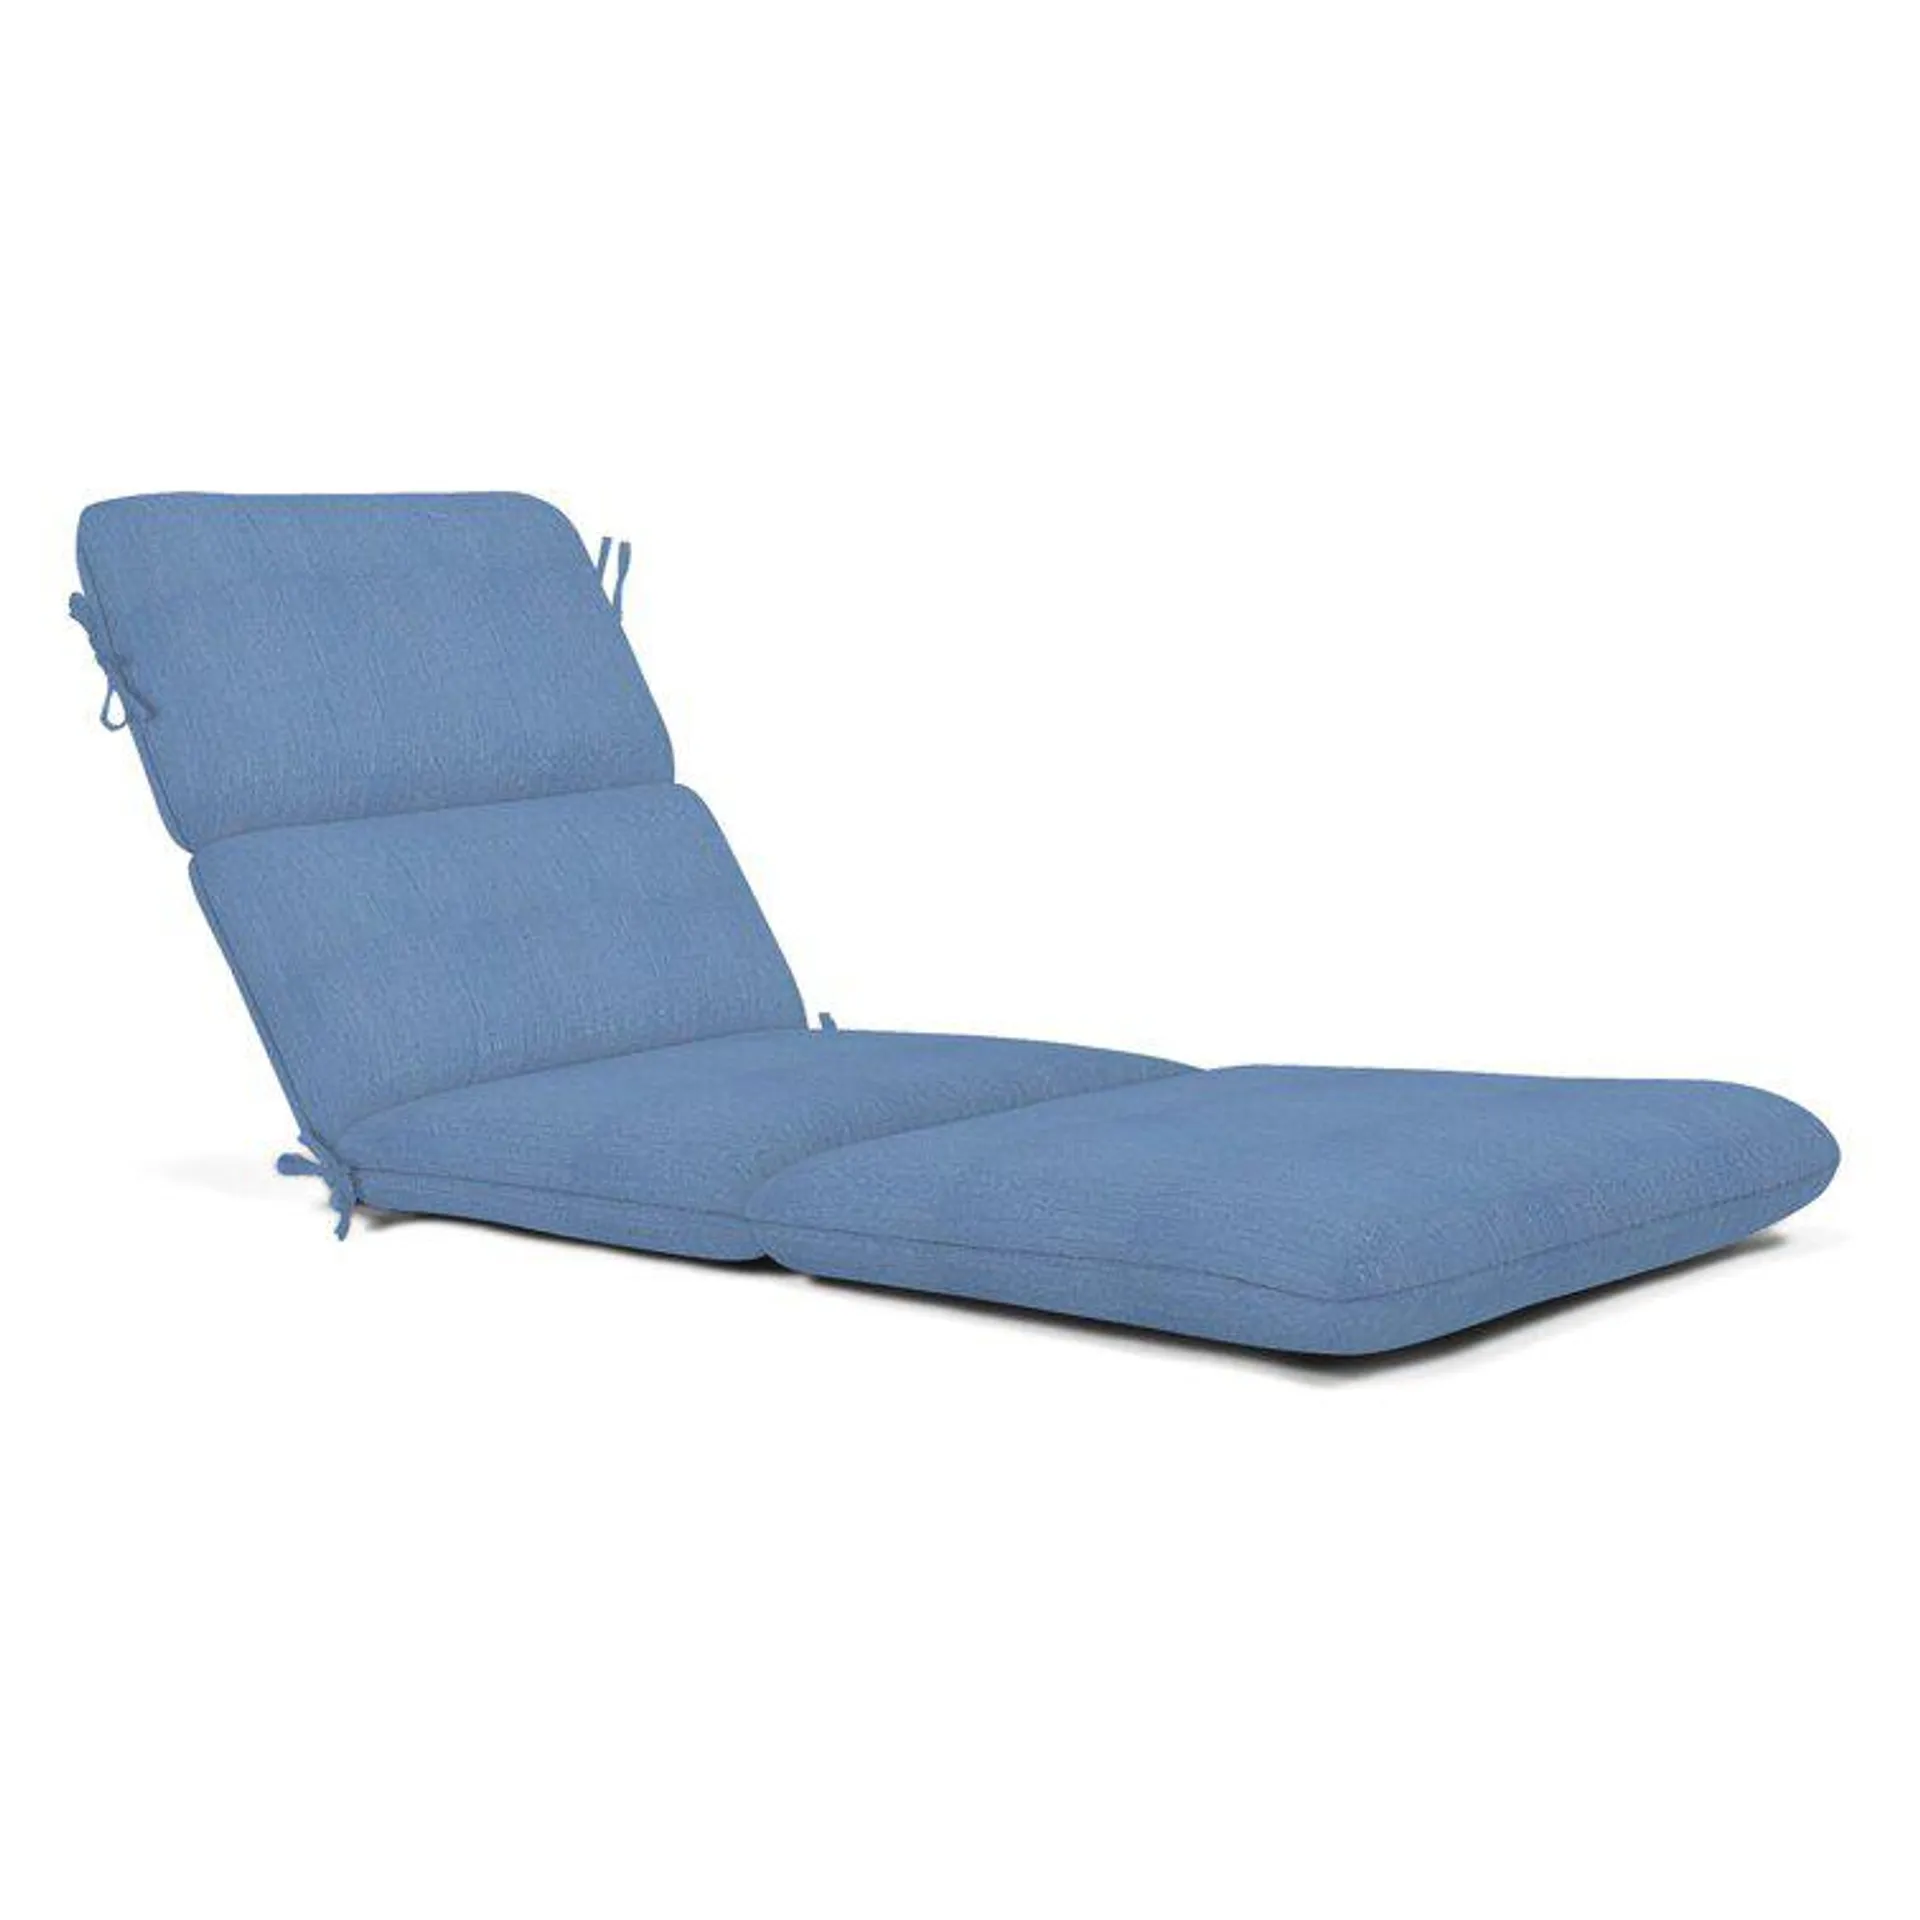 Lisle Sunbrella Outdoor Chaise Lounge Cushion